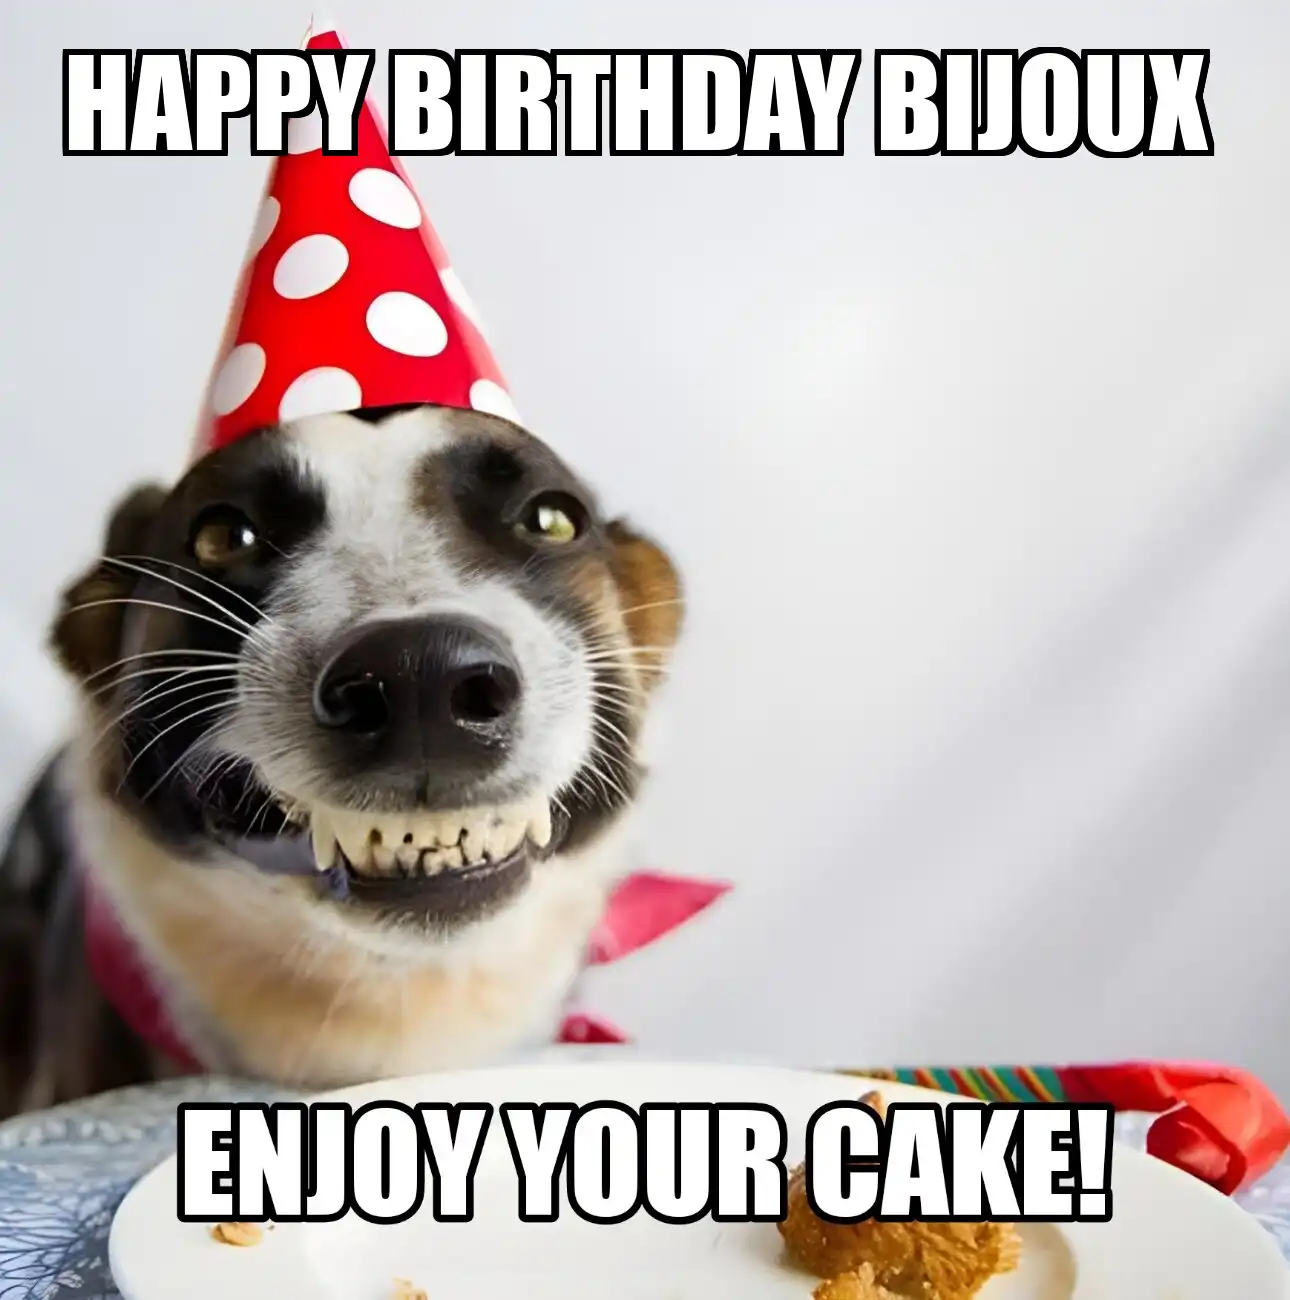 Happy Birthday Bijoux Enjoy Your Cake Dog Meme